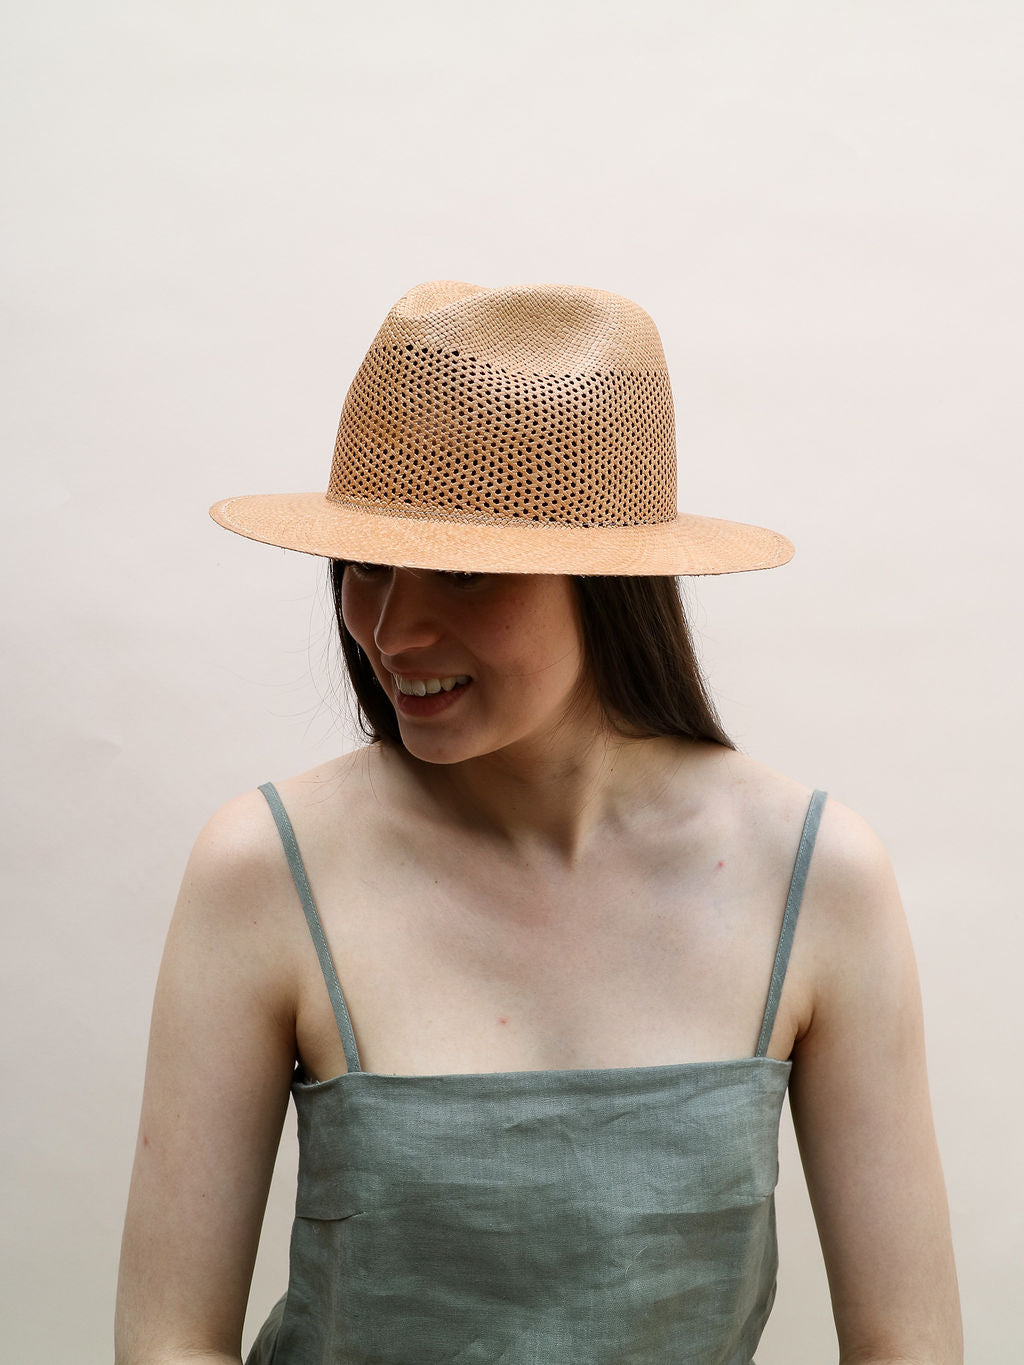 buy summer hats for women in melbourne